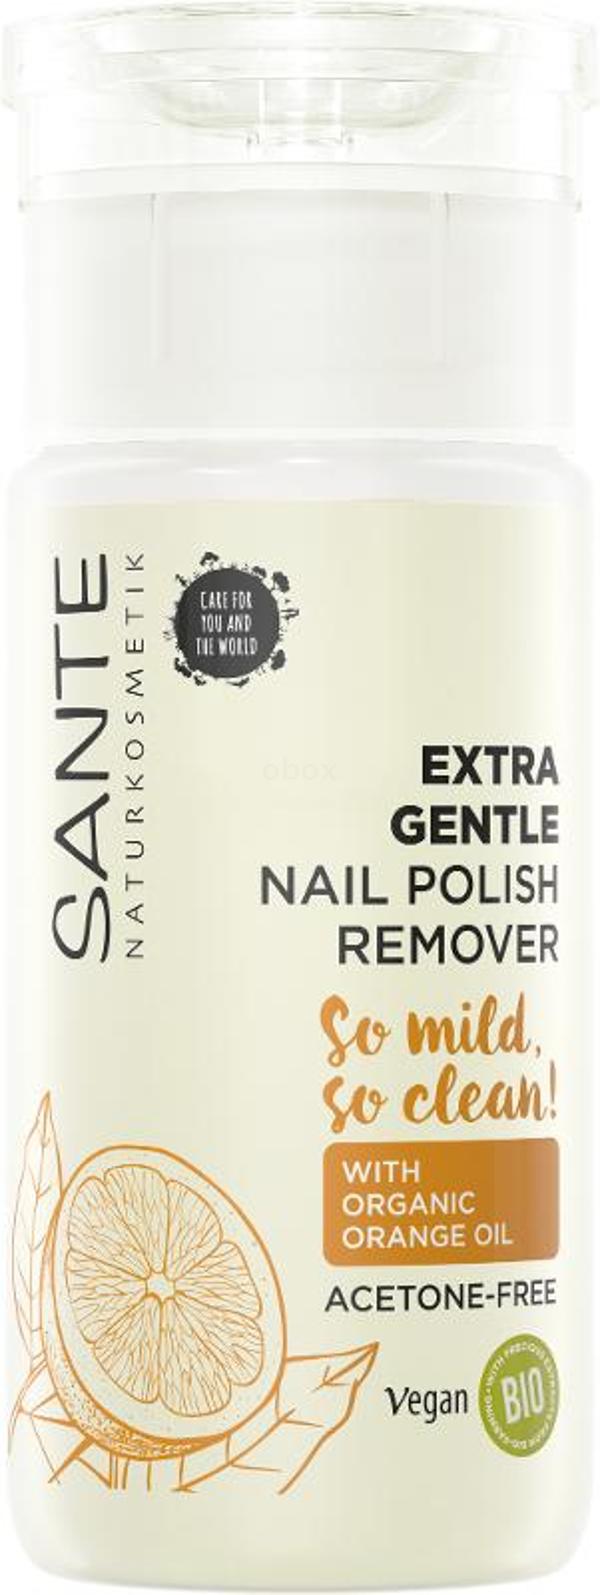 Produktfoto zu Extra Gentle Nail Polish Remover 100ml